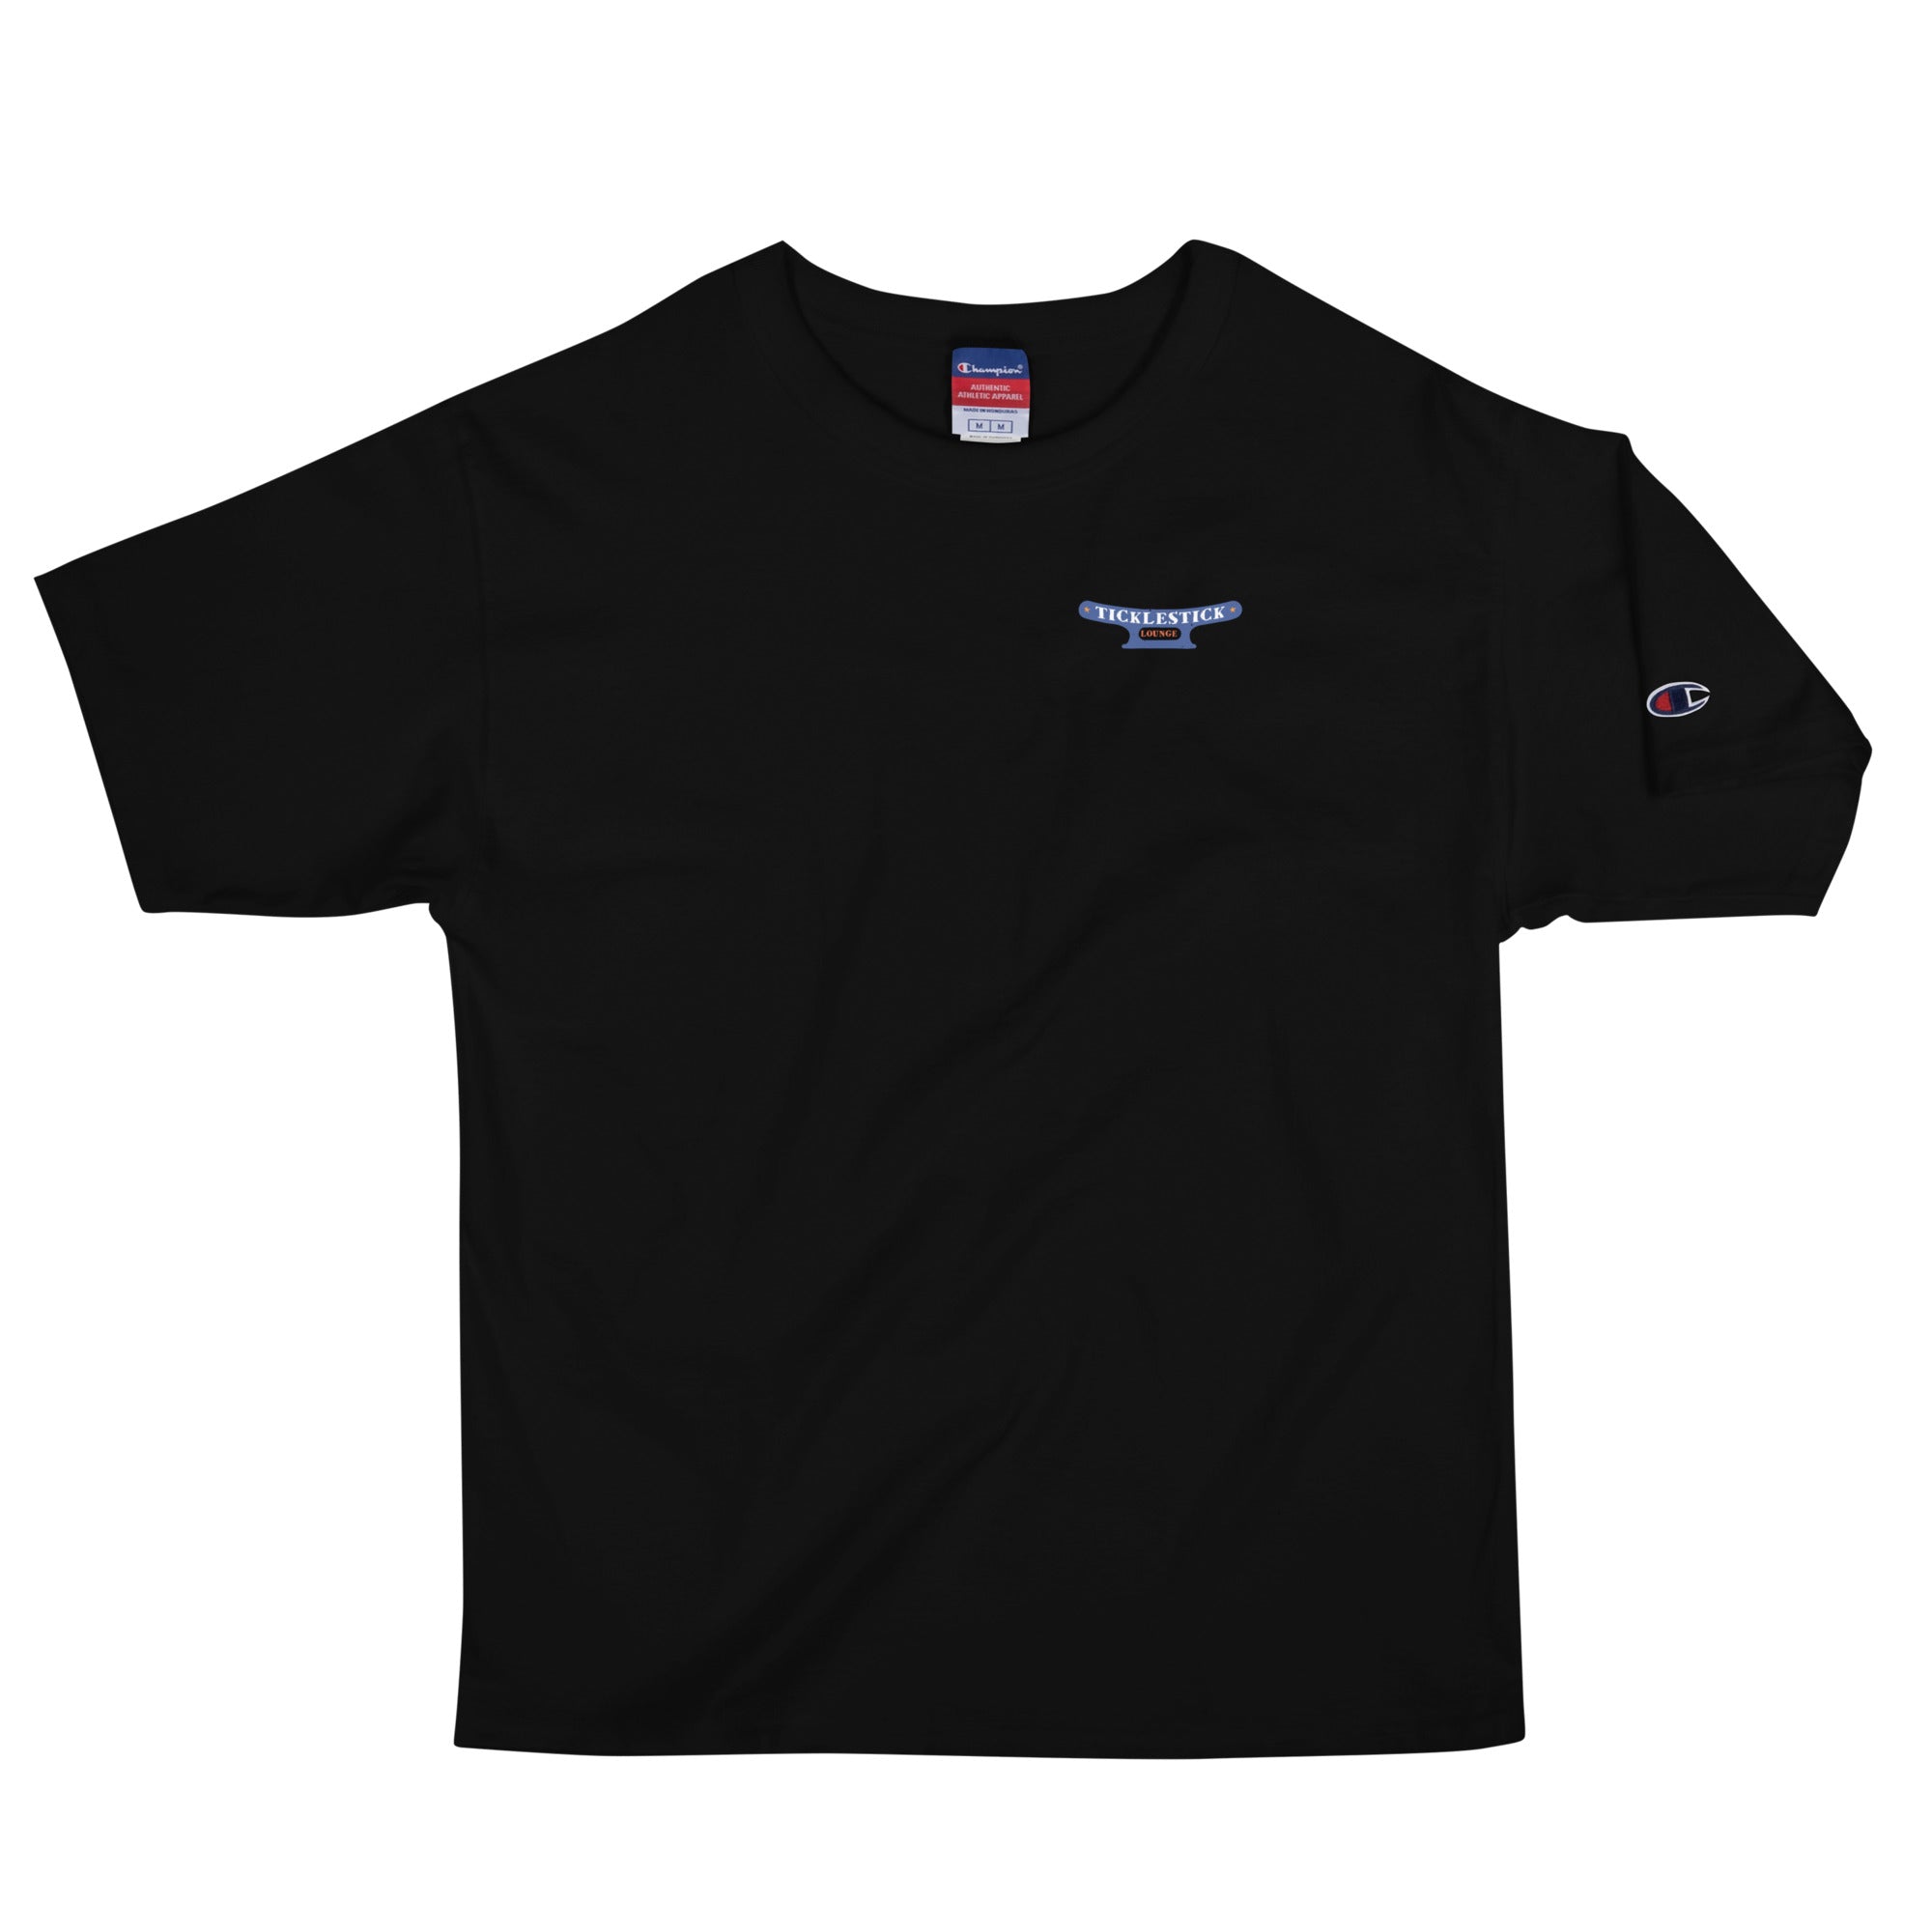 Logo – Lounge T-Shirt Original Champion - Ticklestick